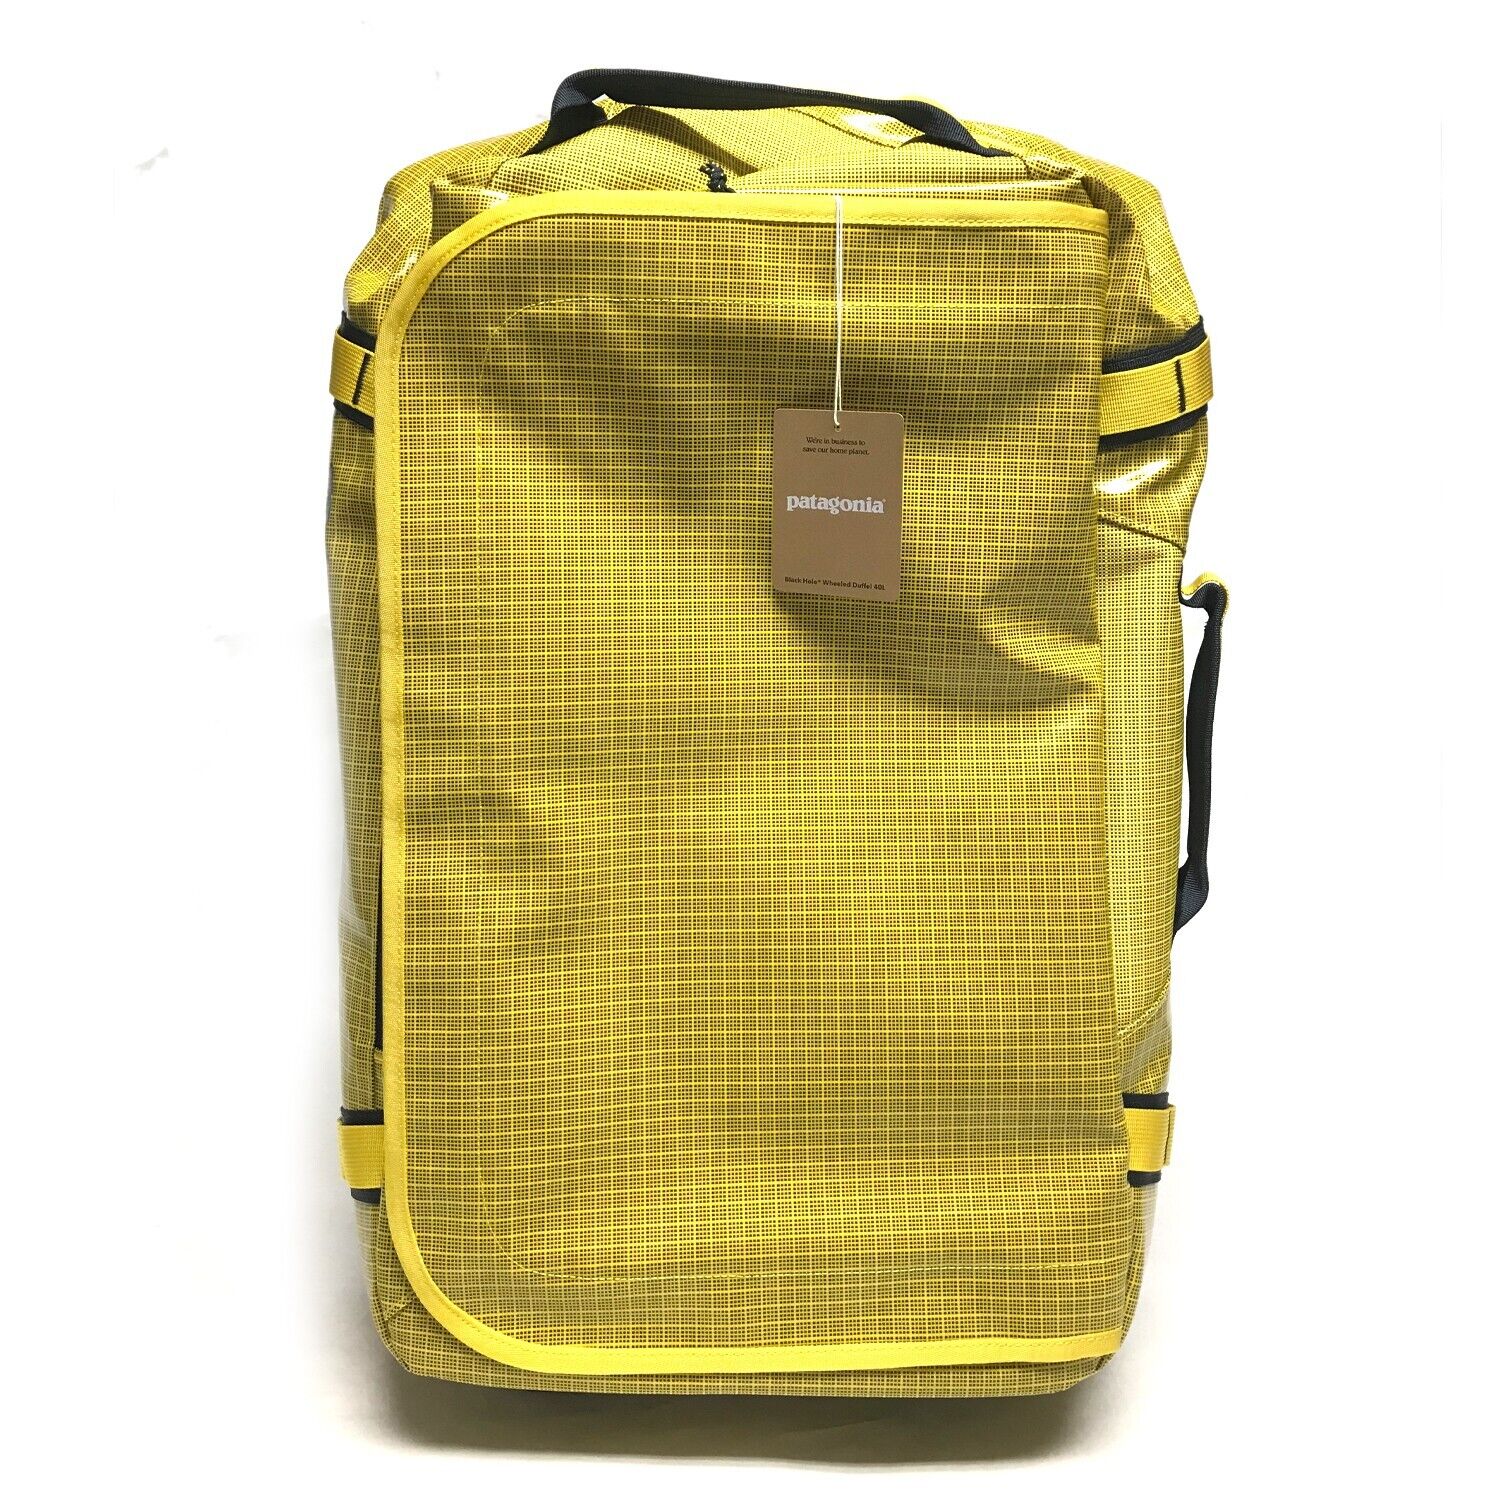 Patagonia Black Hole Wheeled Duffel Bag 40L Carry-on Luggage